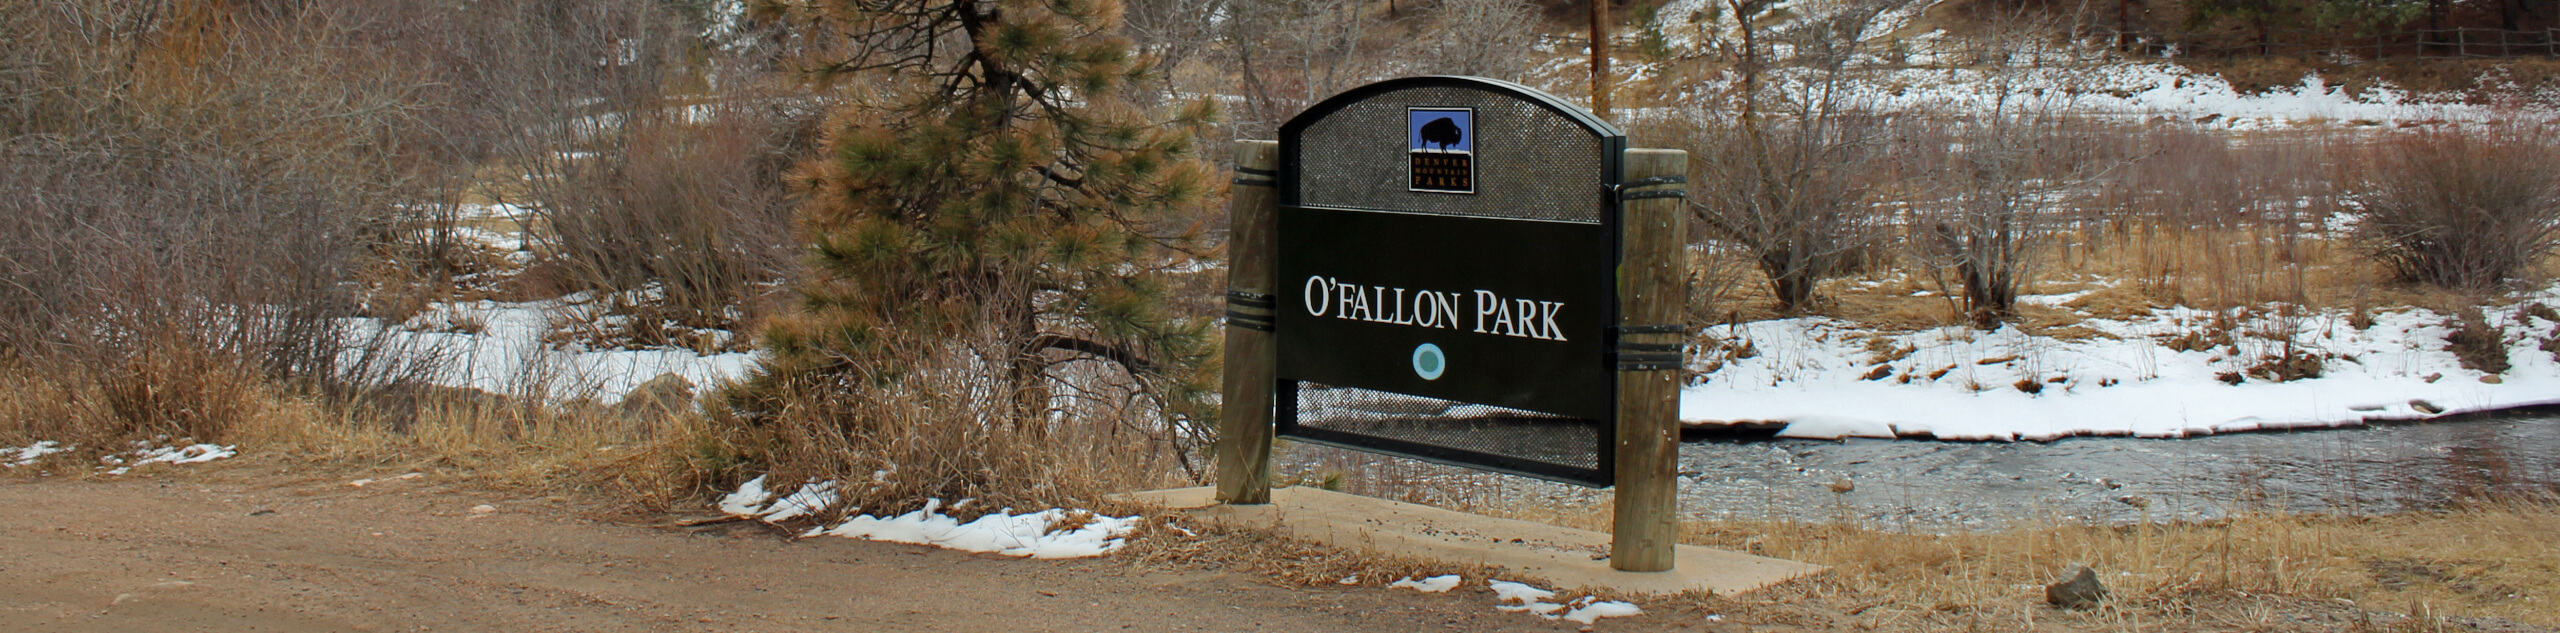 O’Fallon Park Loop Trail